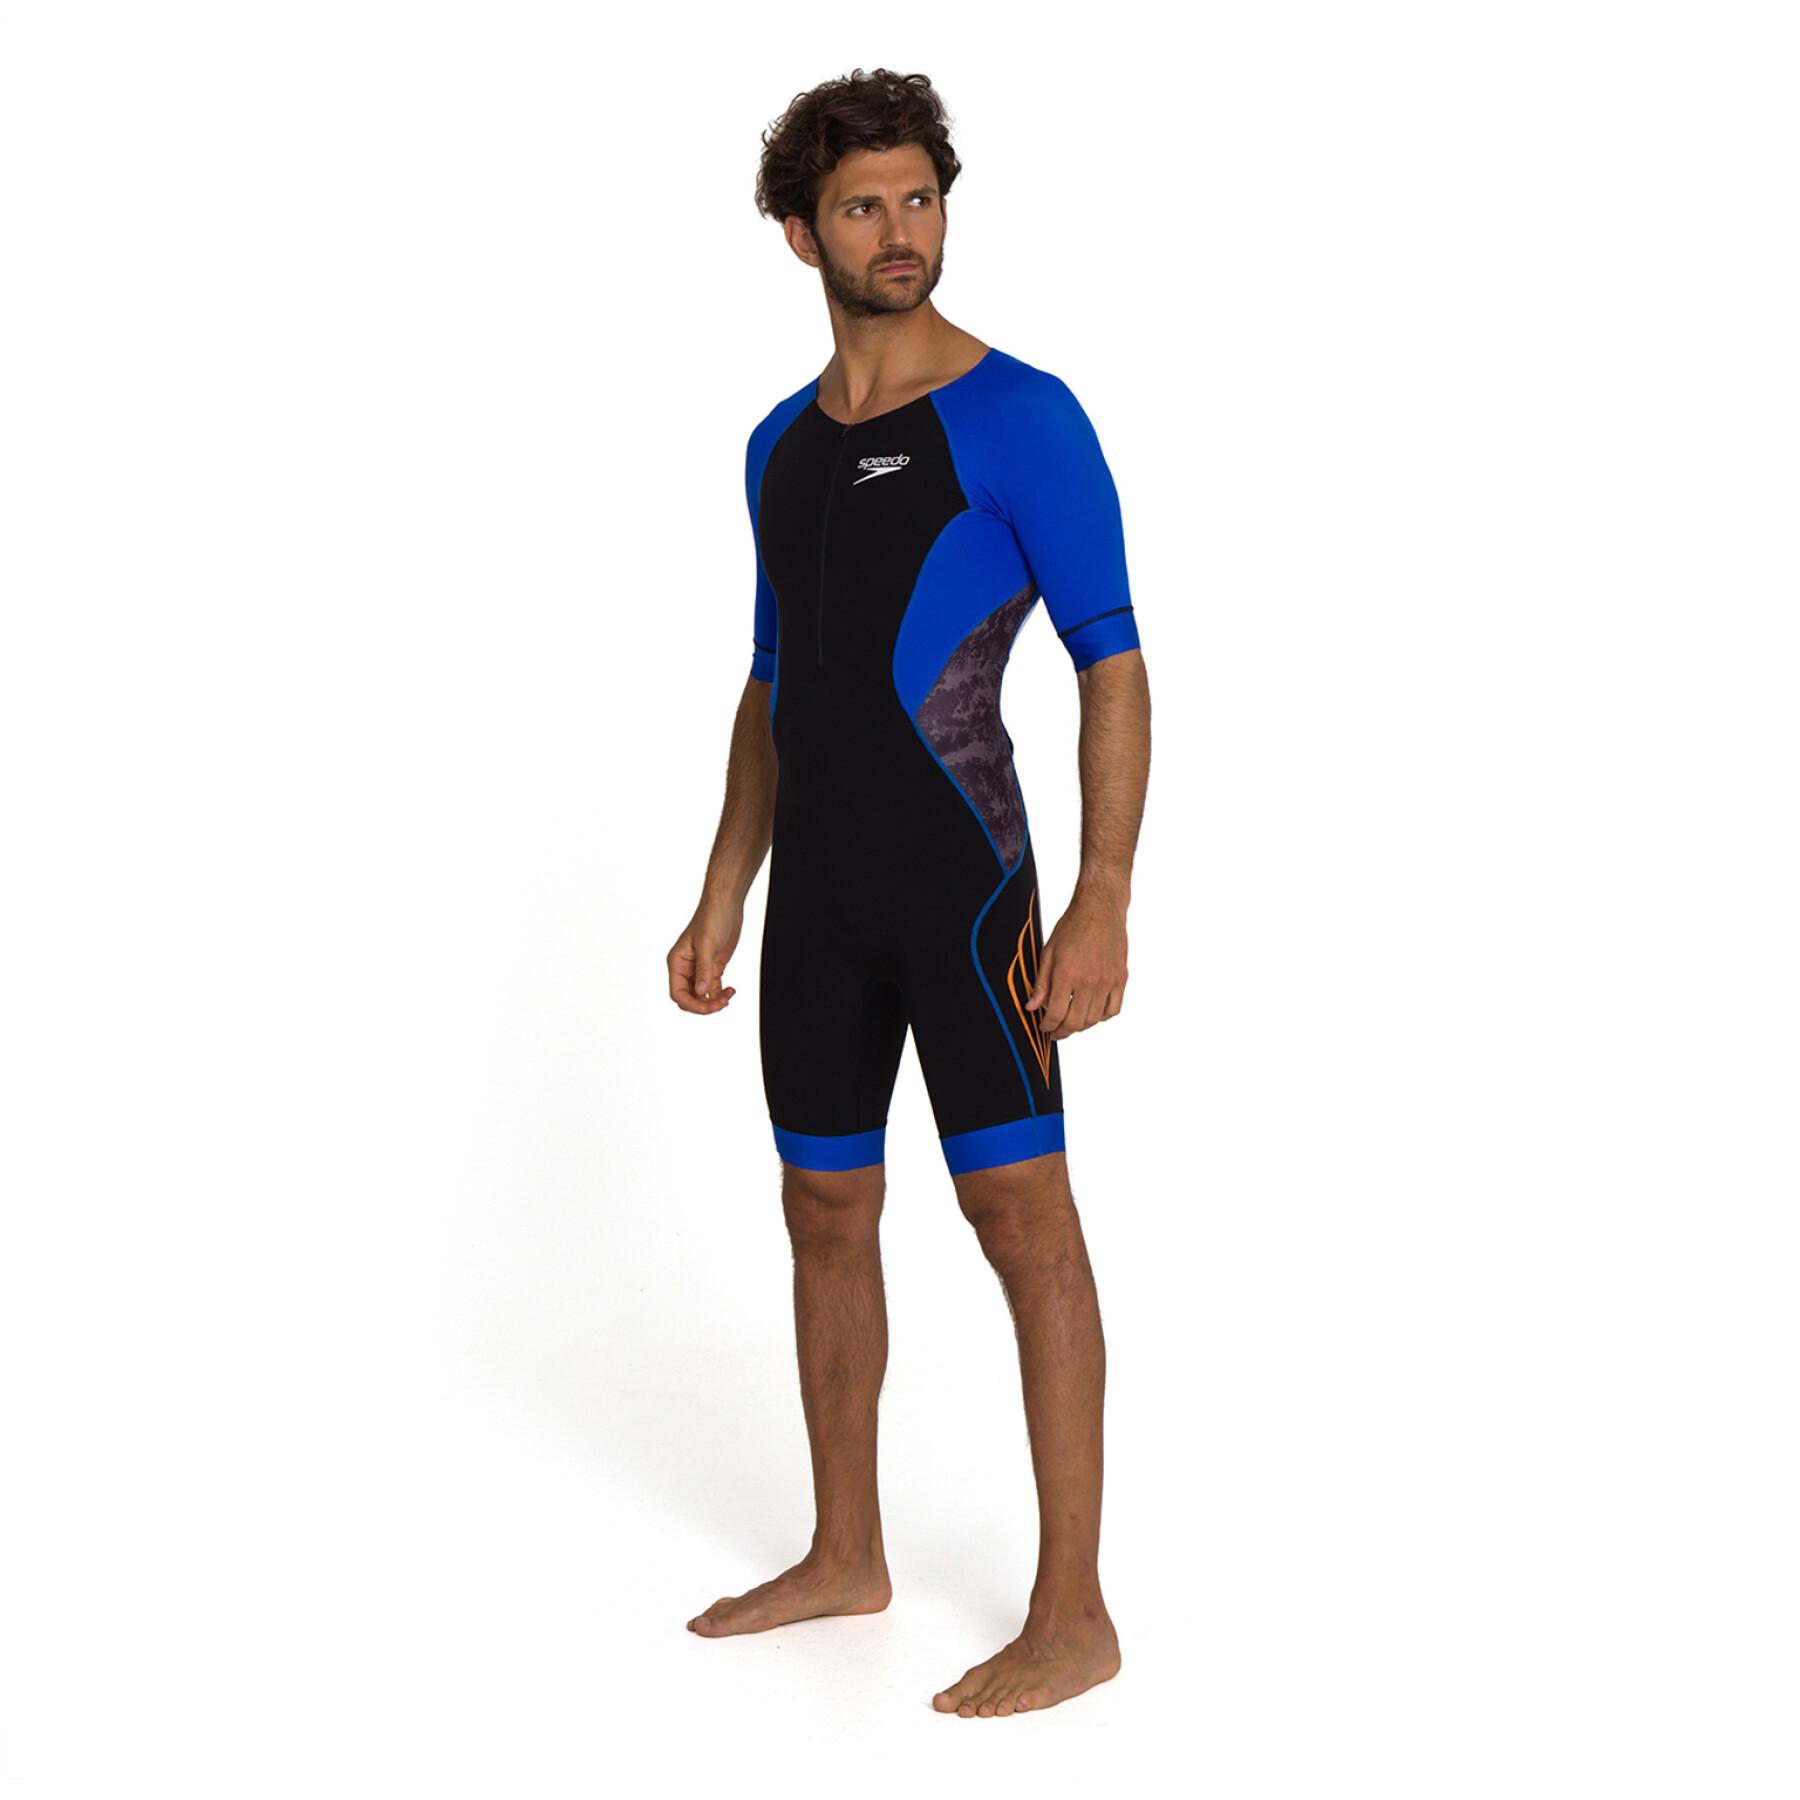 Tri-functional suit Speedo Fs xenon shsl